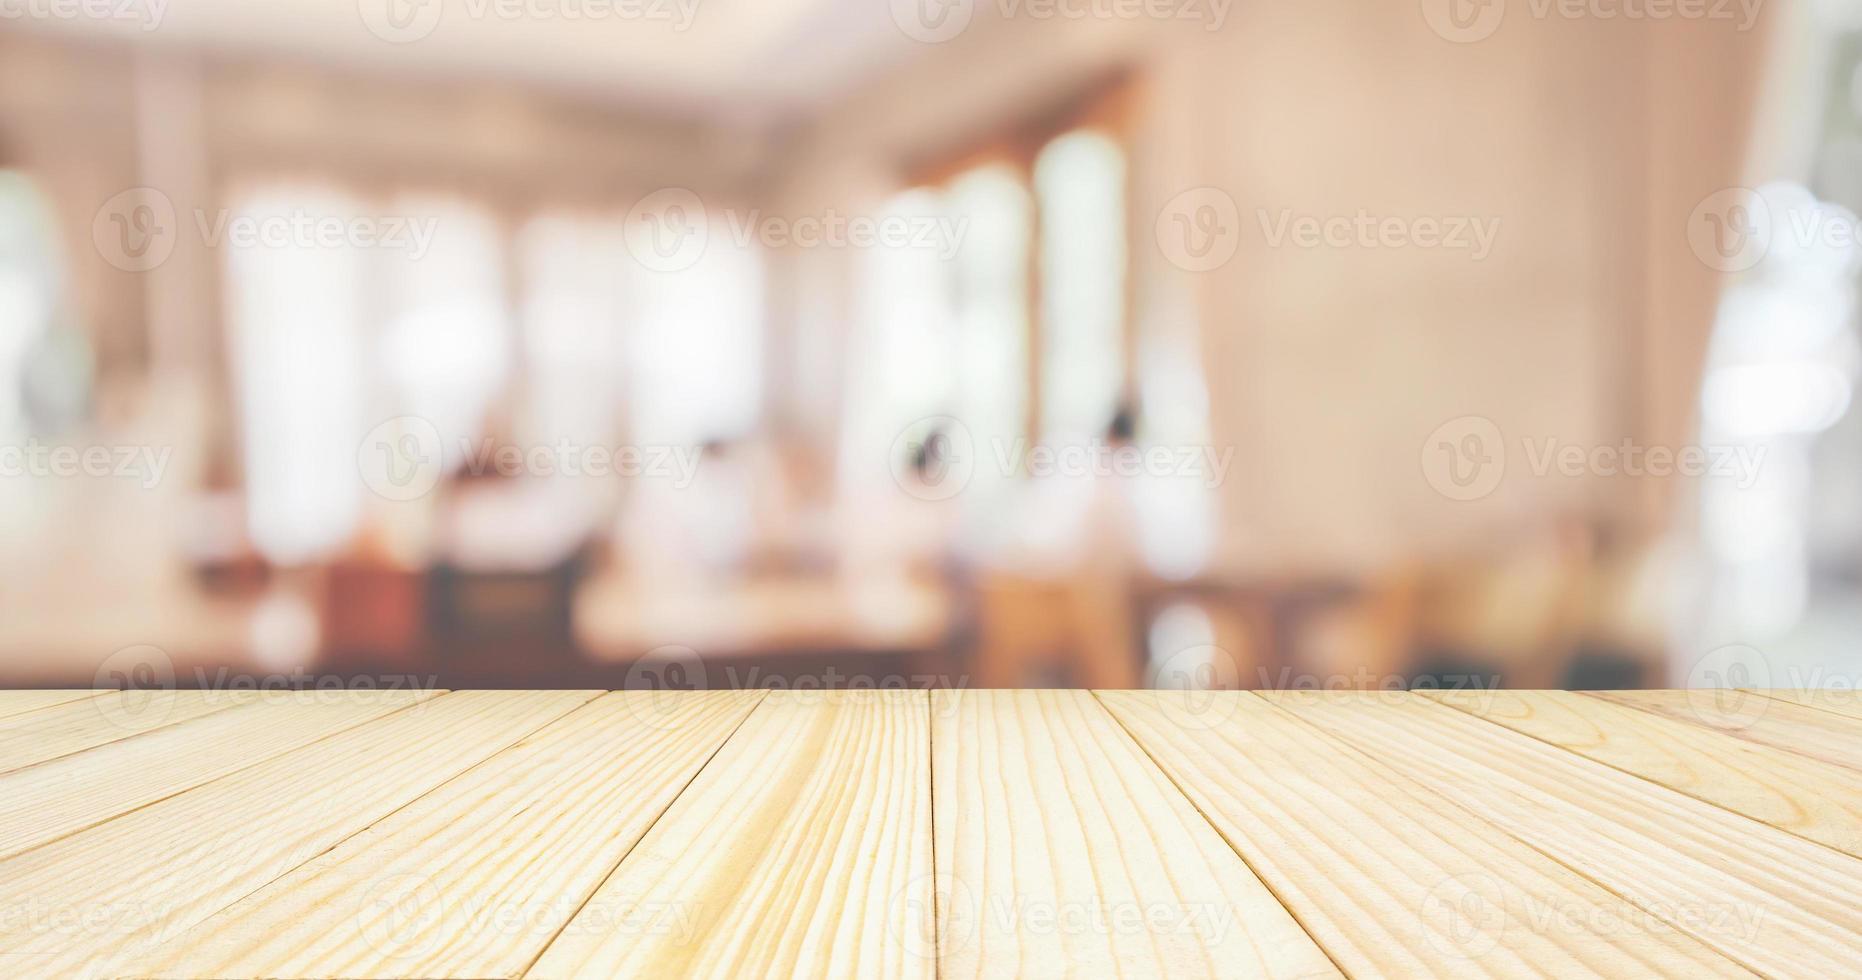 mesa de madera con restaurante cafetería o interior de cafetería con gente abstracta fondo borroso desenfocado foto